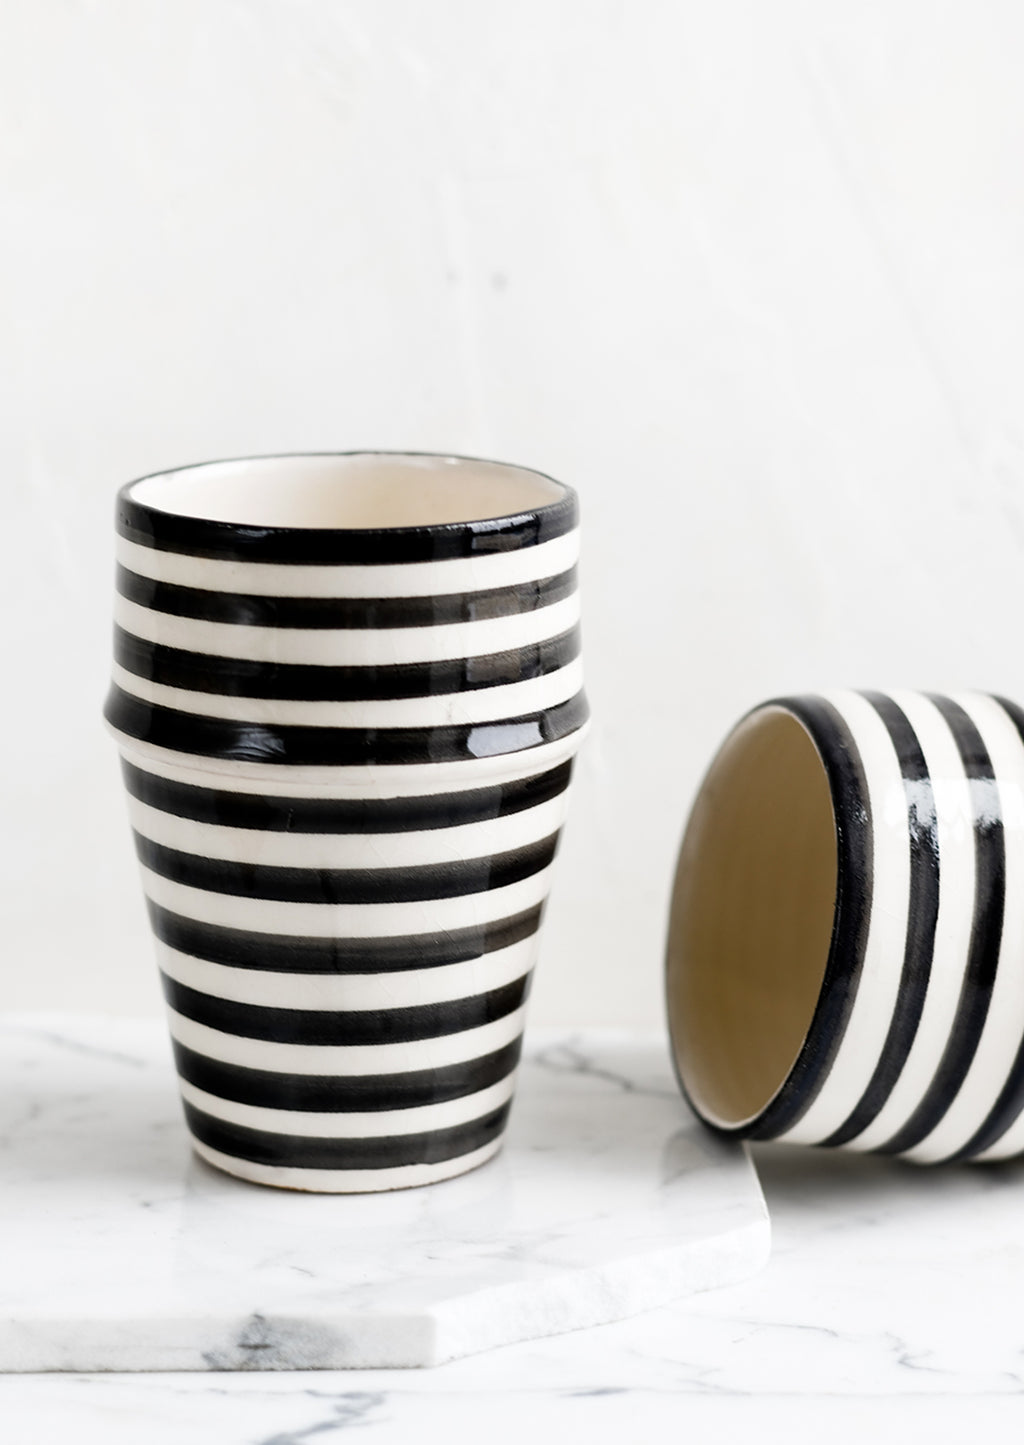 Black: Two moroccan Beldi cups in striped black ceramic.